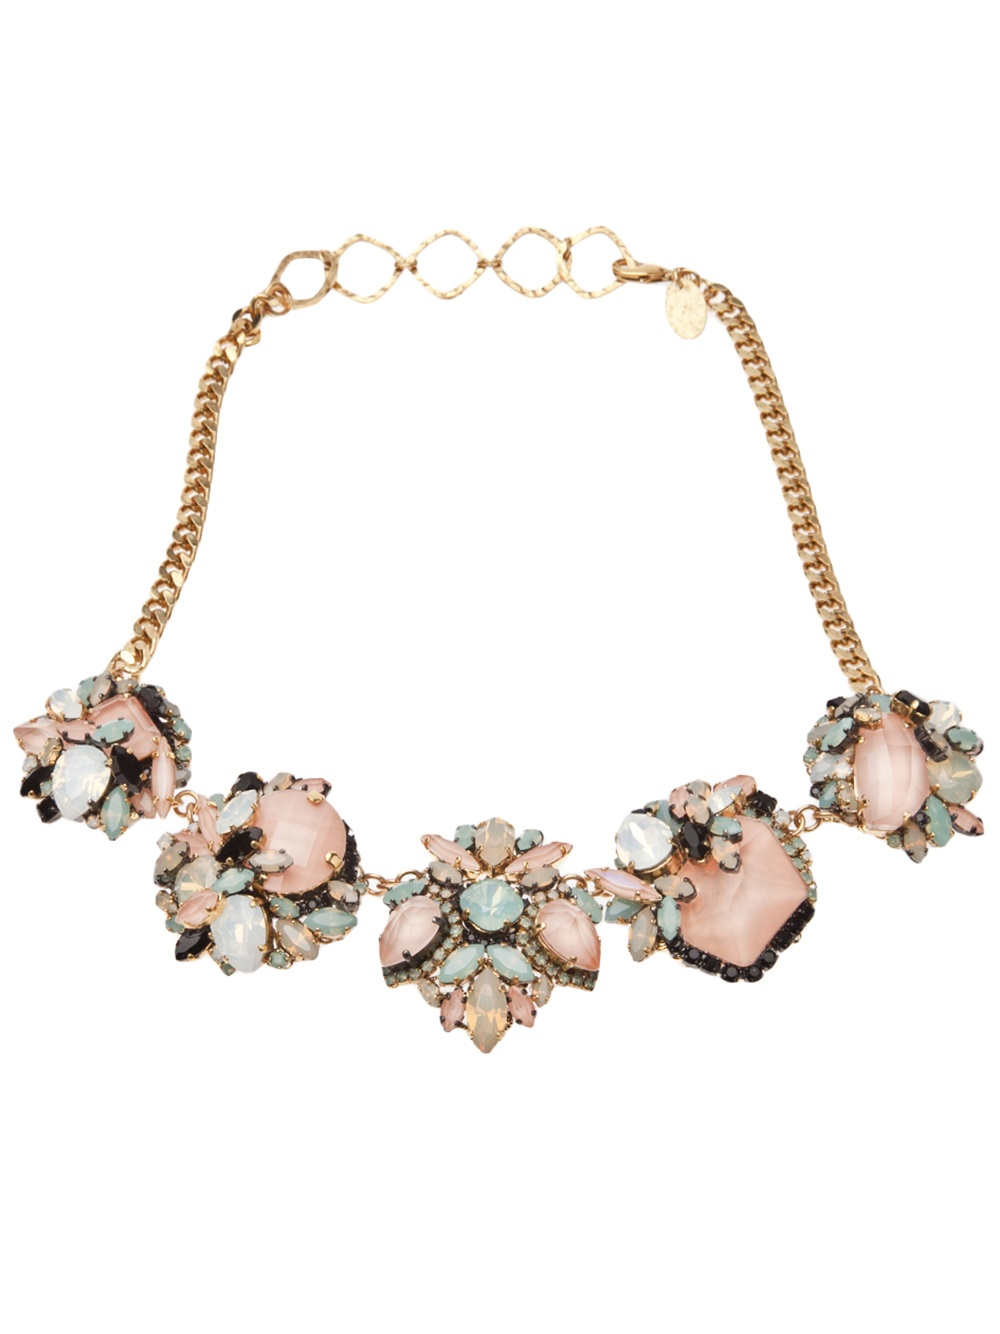 Lyst - Erickson Beamon Girls On Film Necklace in Pink